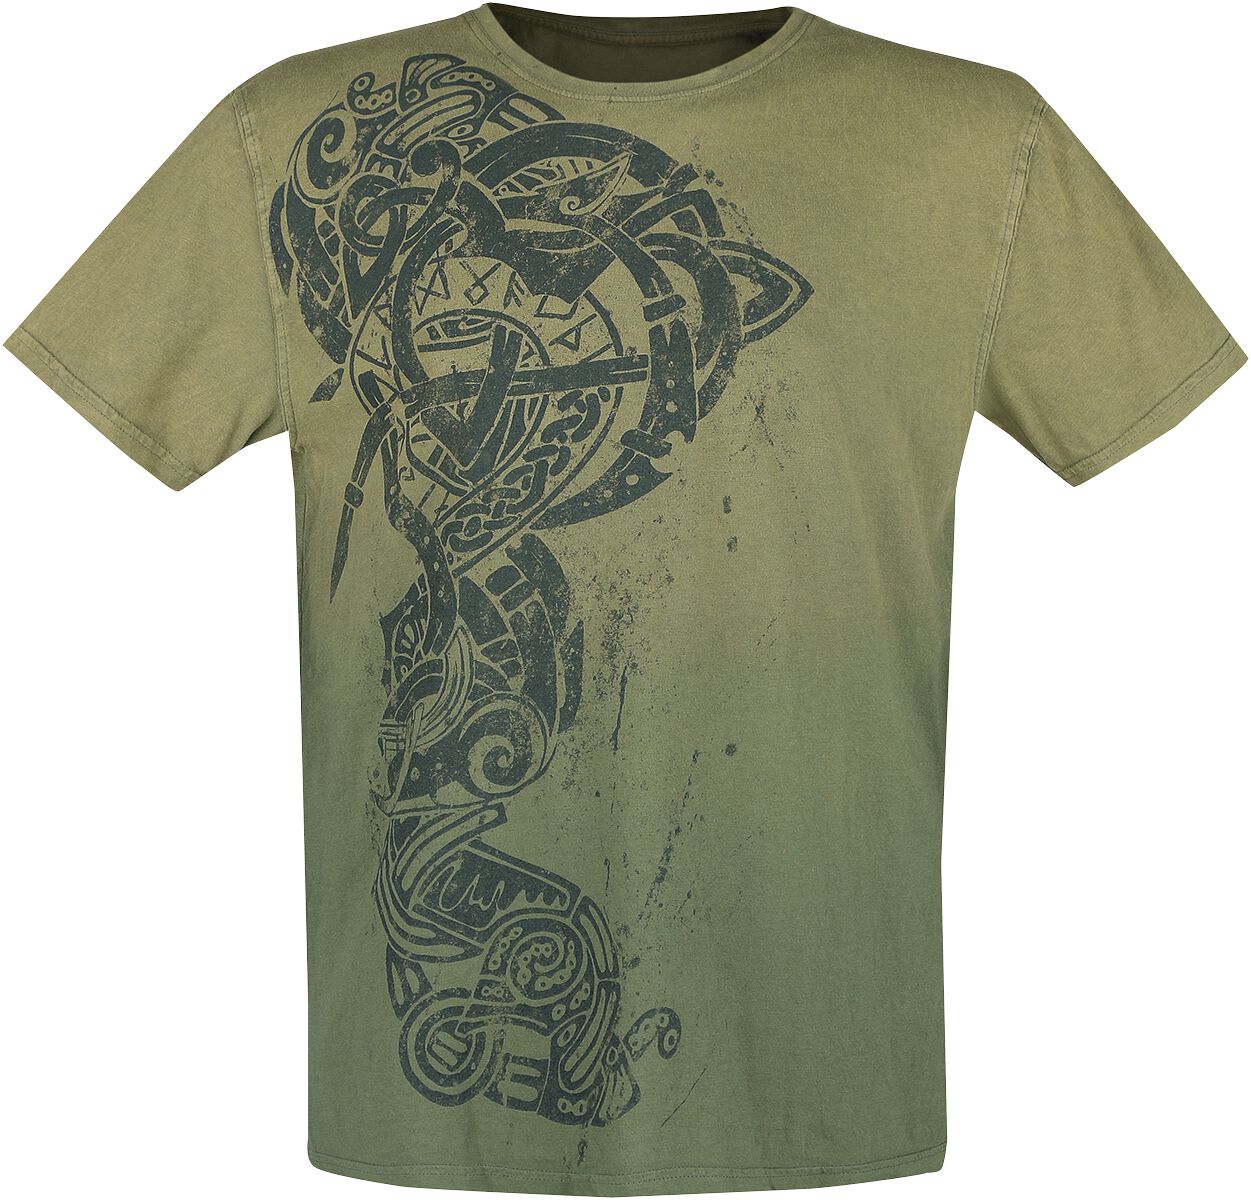 Outer Vision Boulder Tattoo T-Shirt grün in M